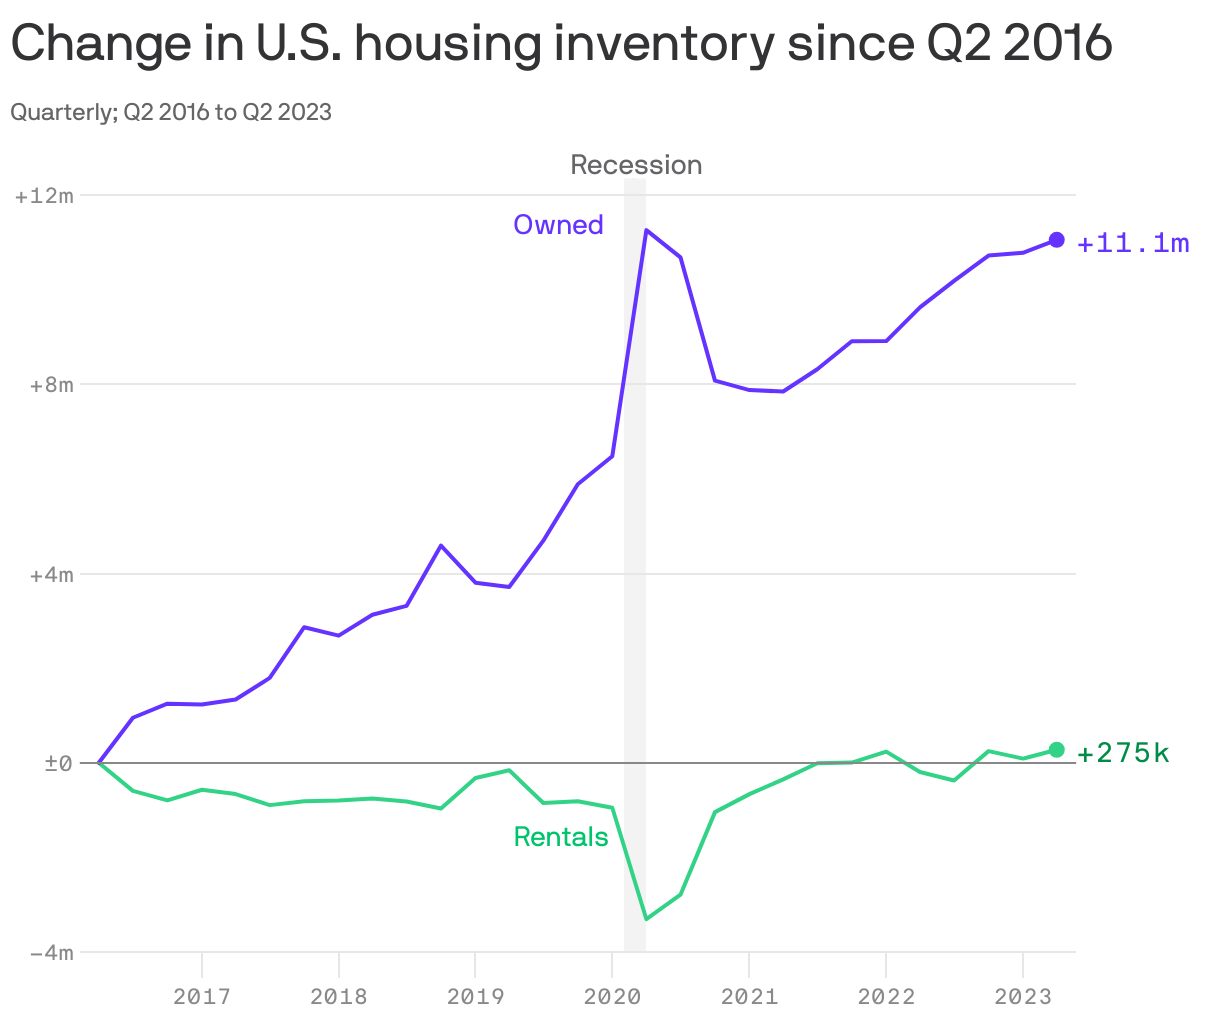 Change in U.S. housing inventory since Q2 2016